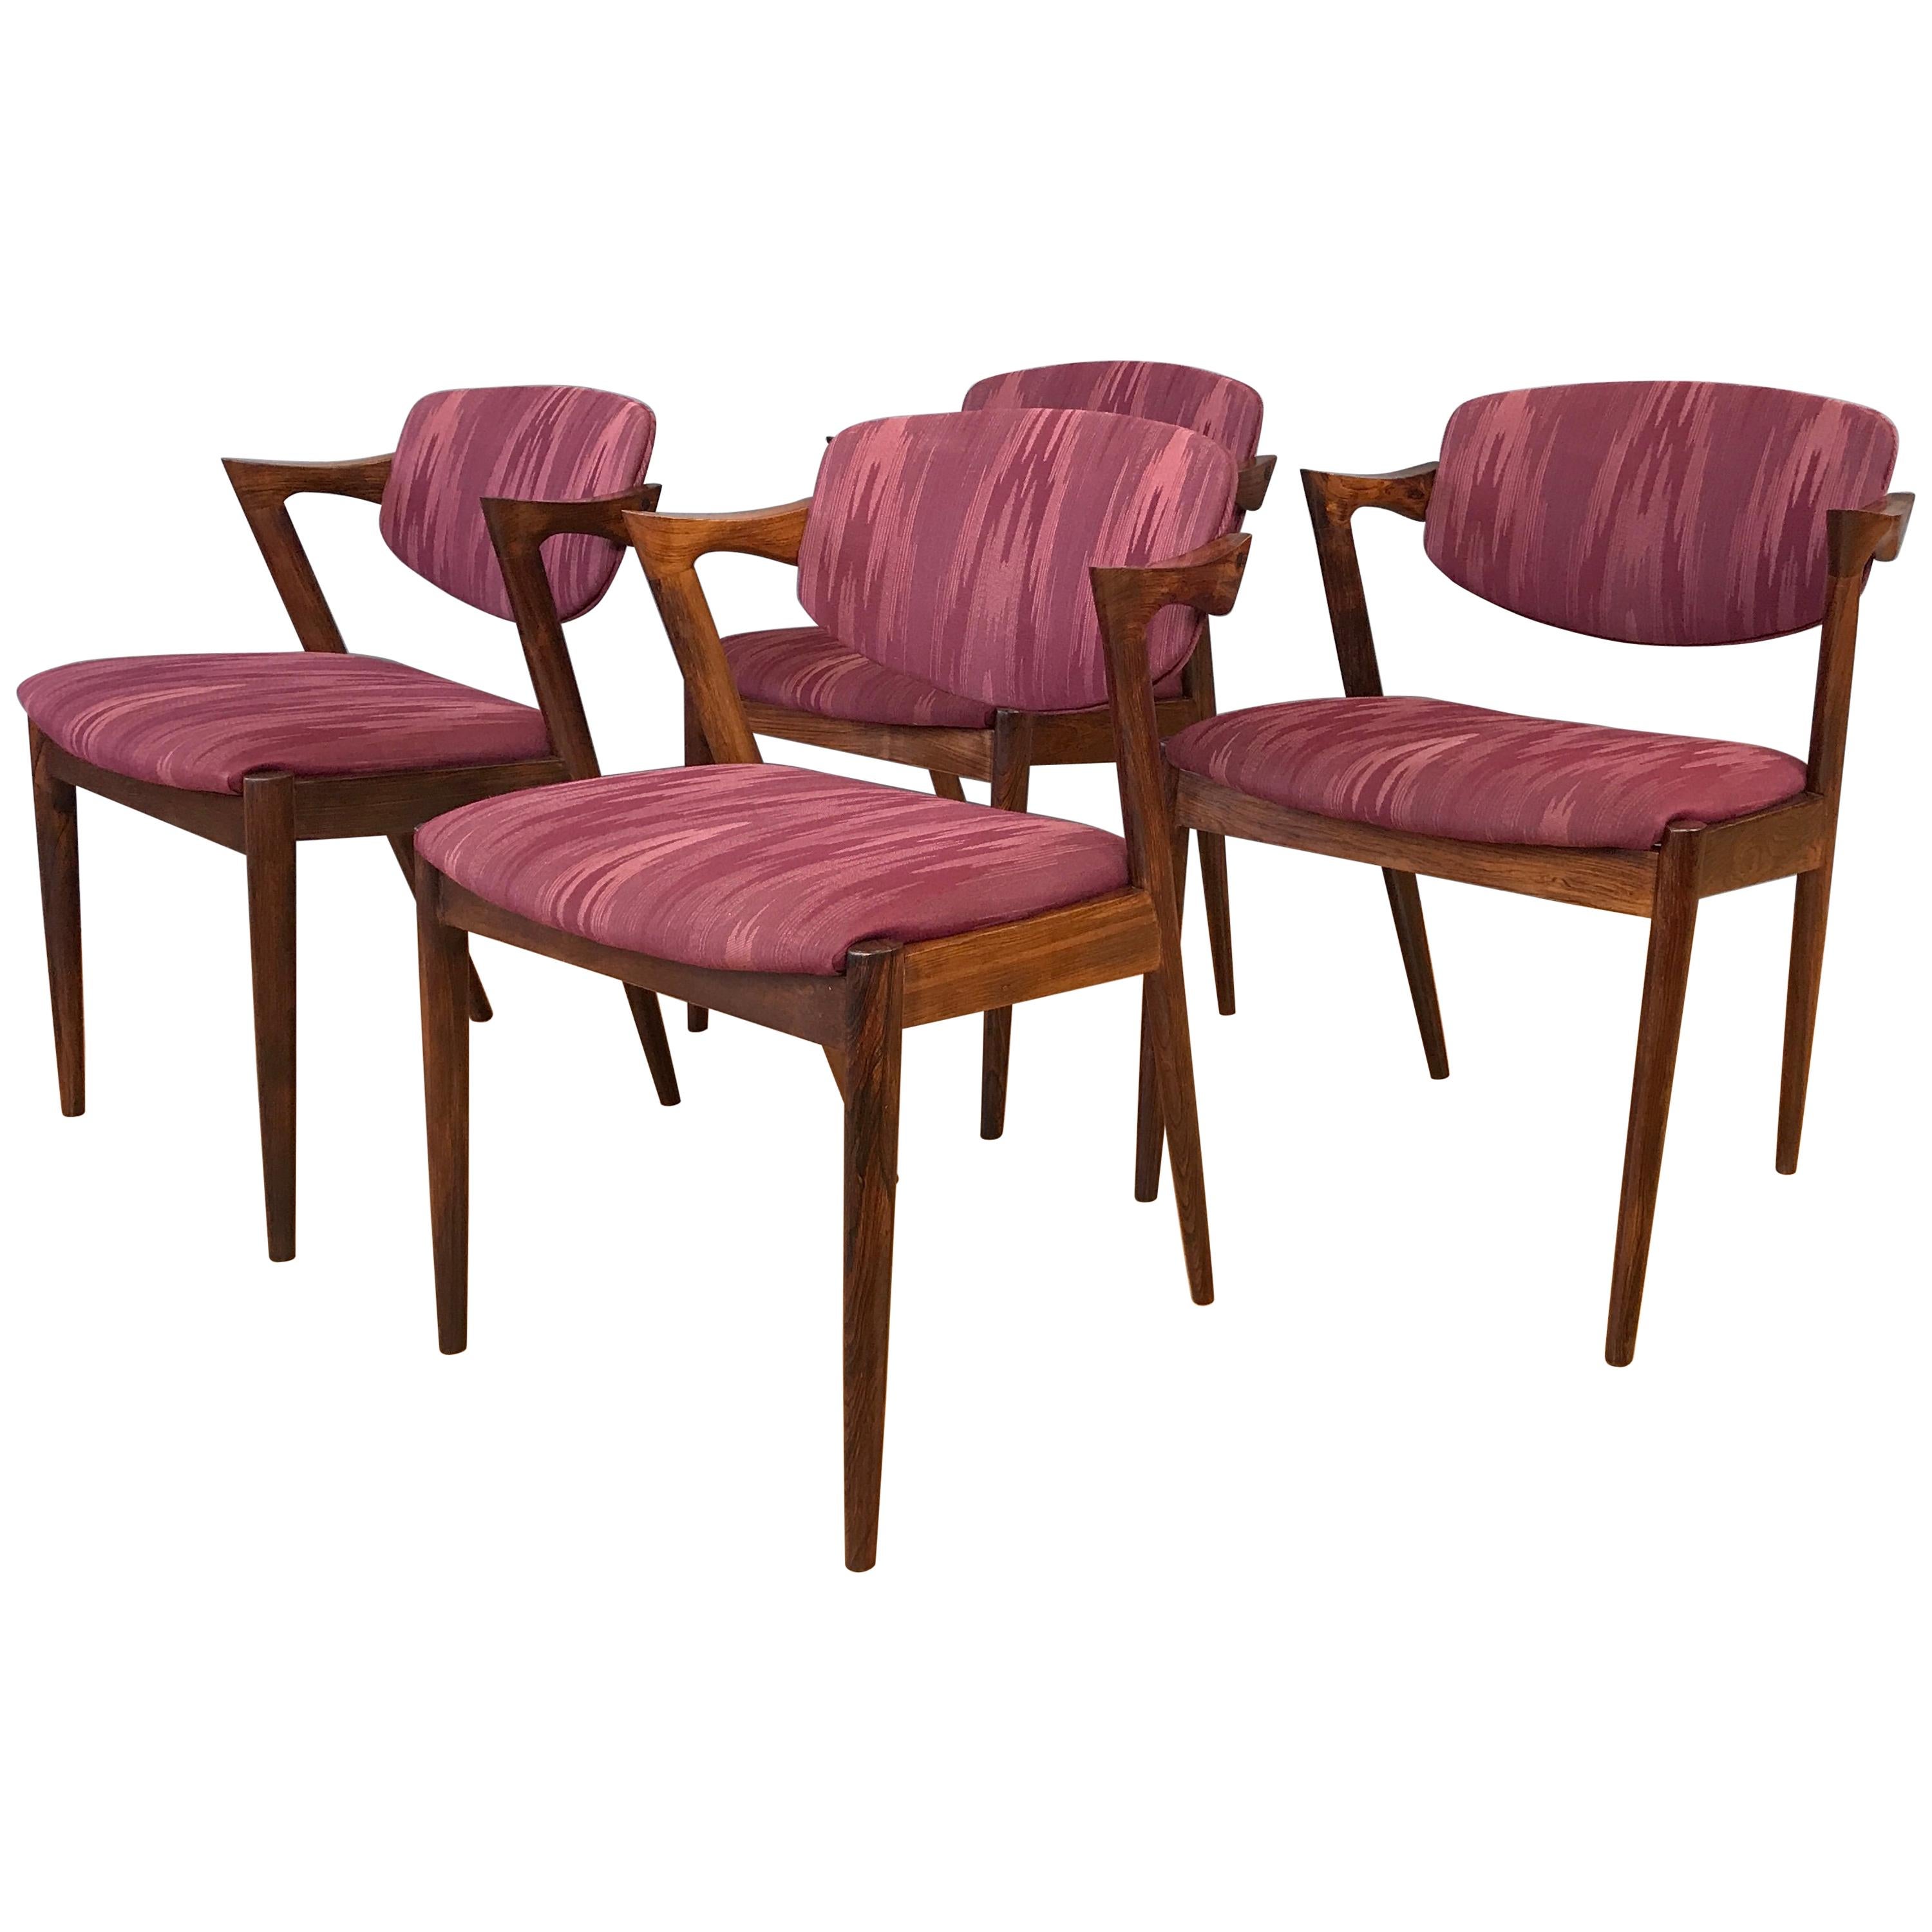 Four Kai Kristiansen Rosewood Dining Chairs for Schou Andersen